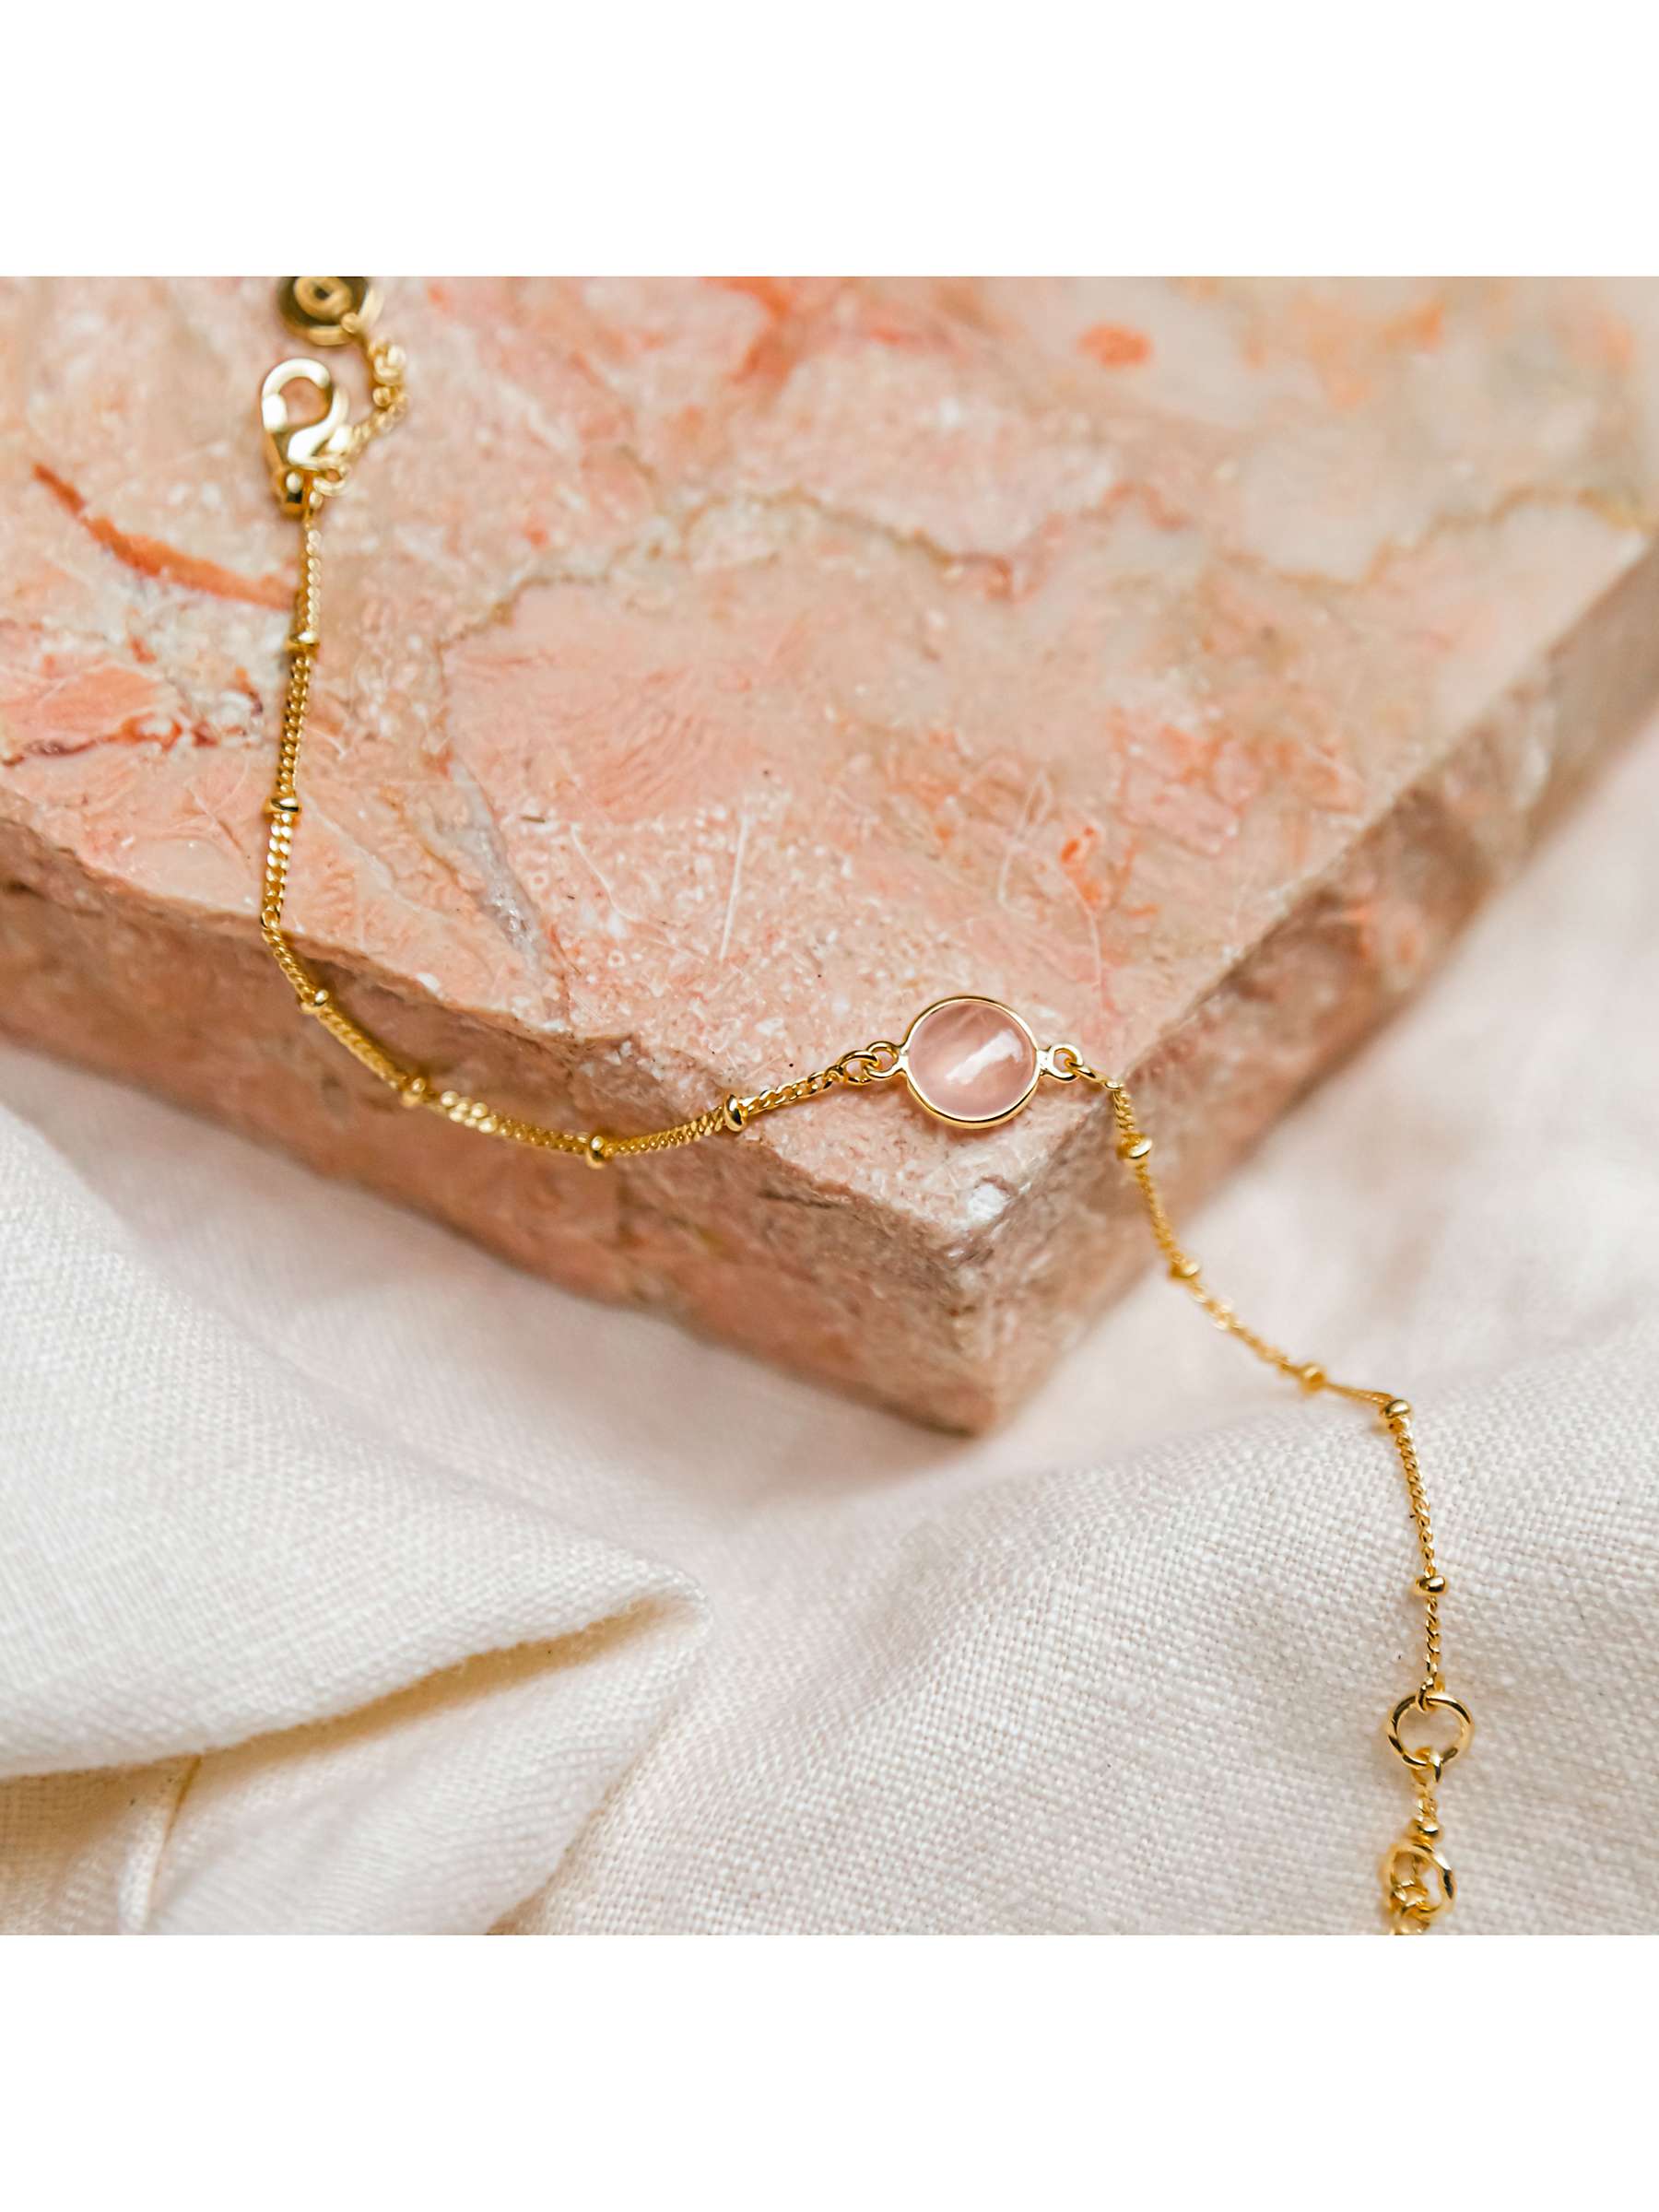 Buy Daisy London Round Semi-Precious Healing Stone Bead Chain Bracelet, Rose Quartz Online at johnlewis.com